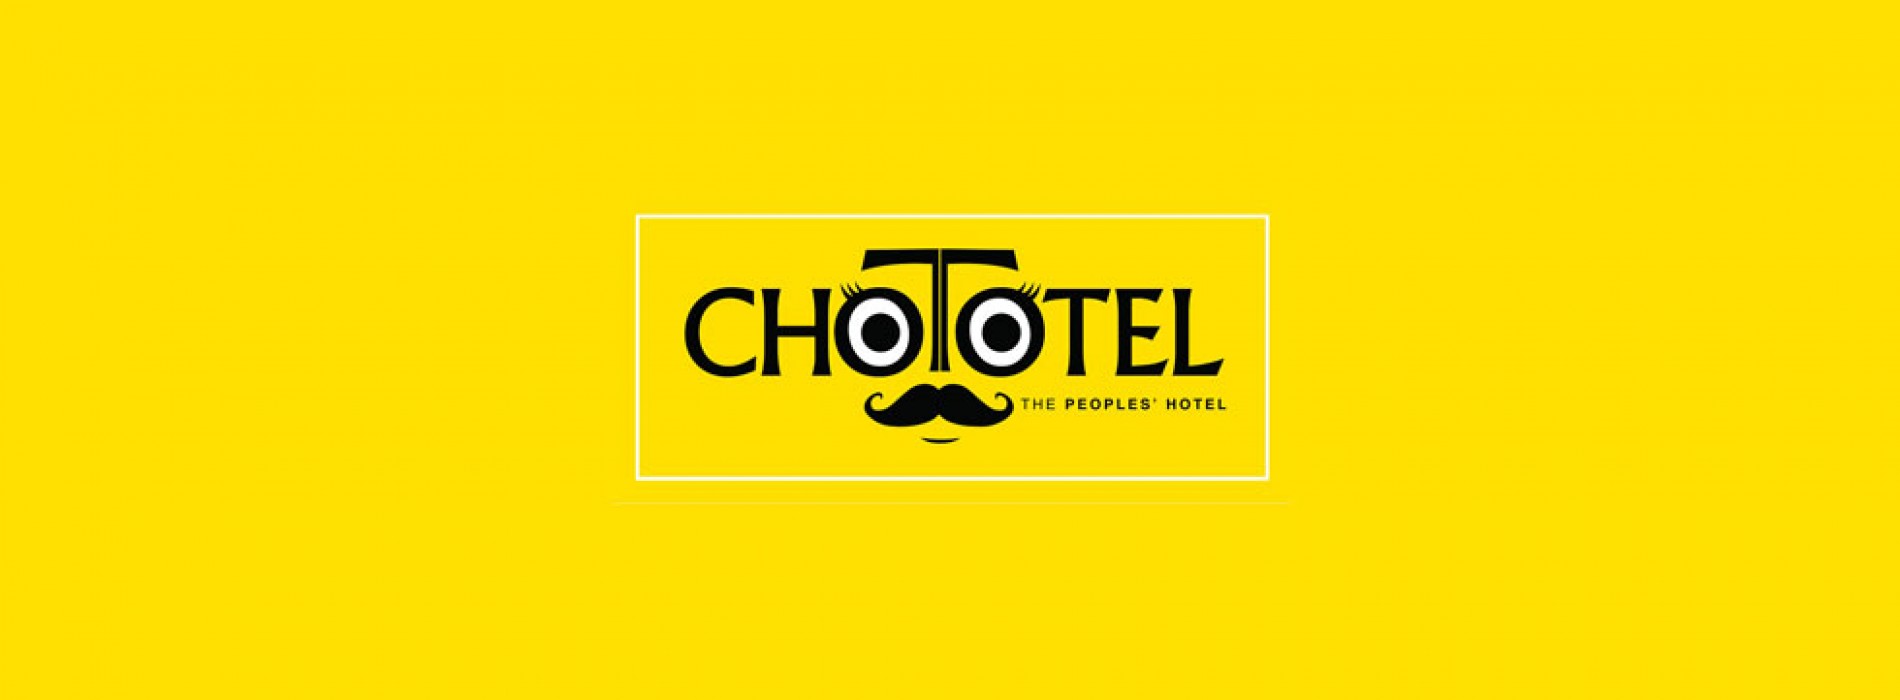 Chototel has chosen India to set up its pilot “super-budget” hotel concept